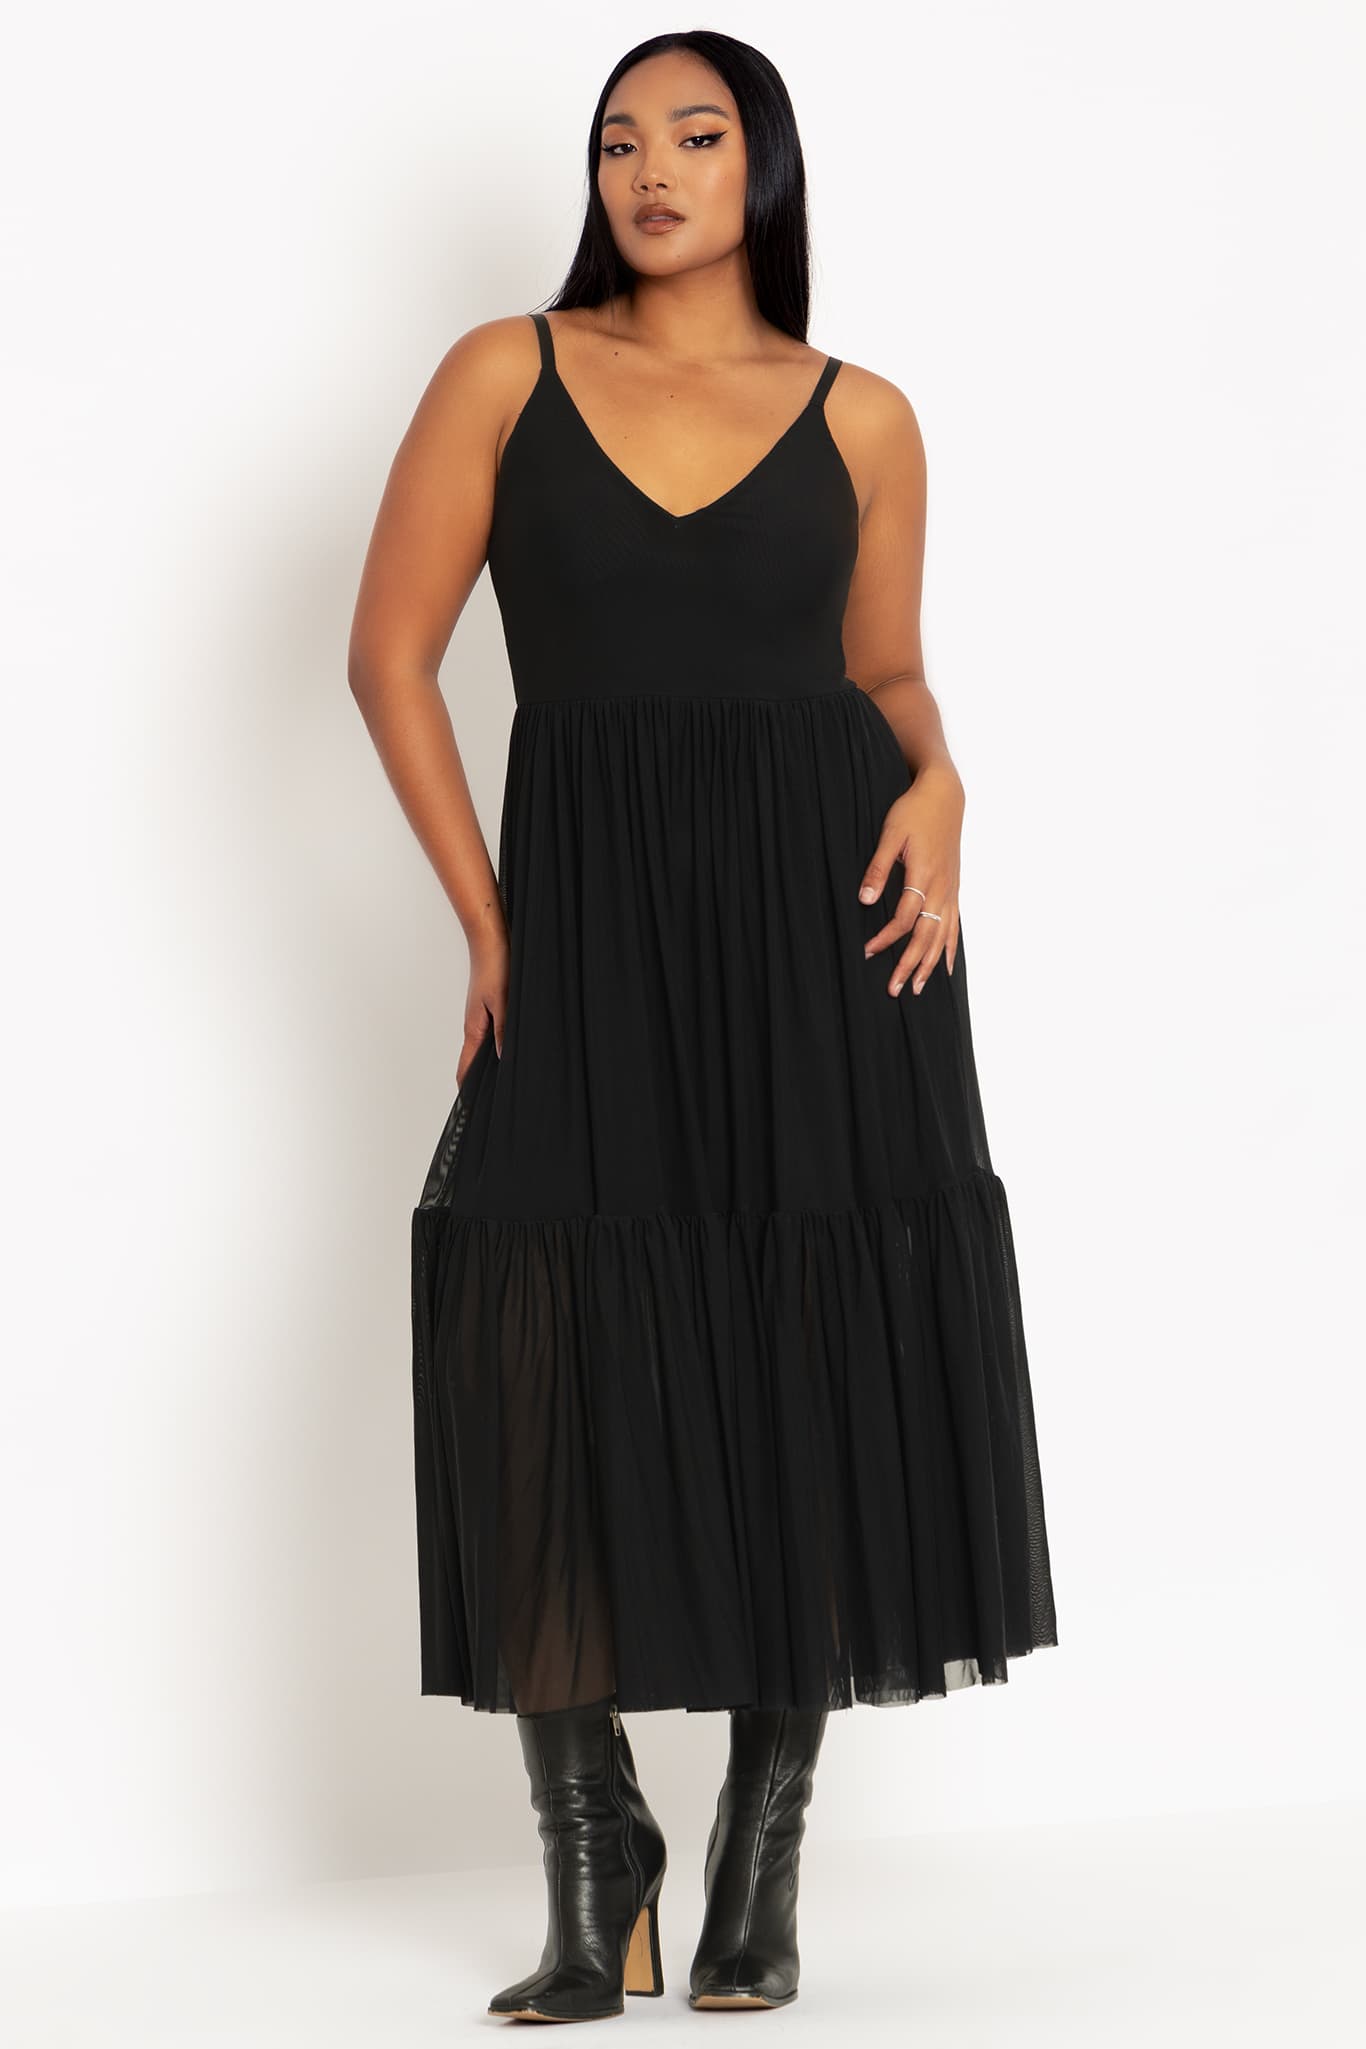 Black Sheer Mesh Rhinestone Halter Mini Dress – Hot Miami Styles